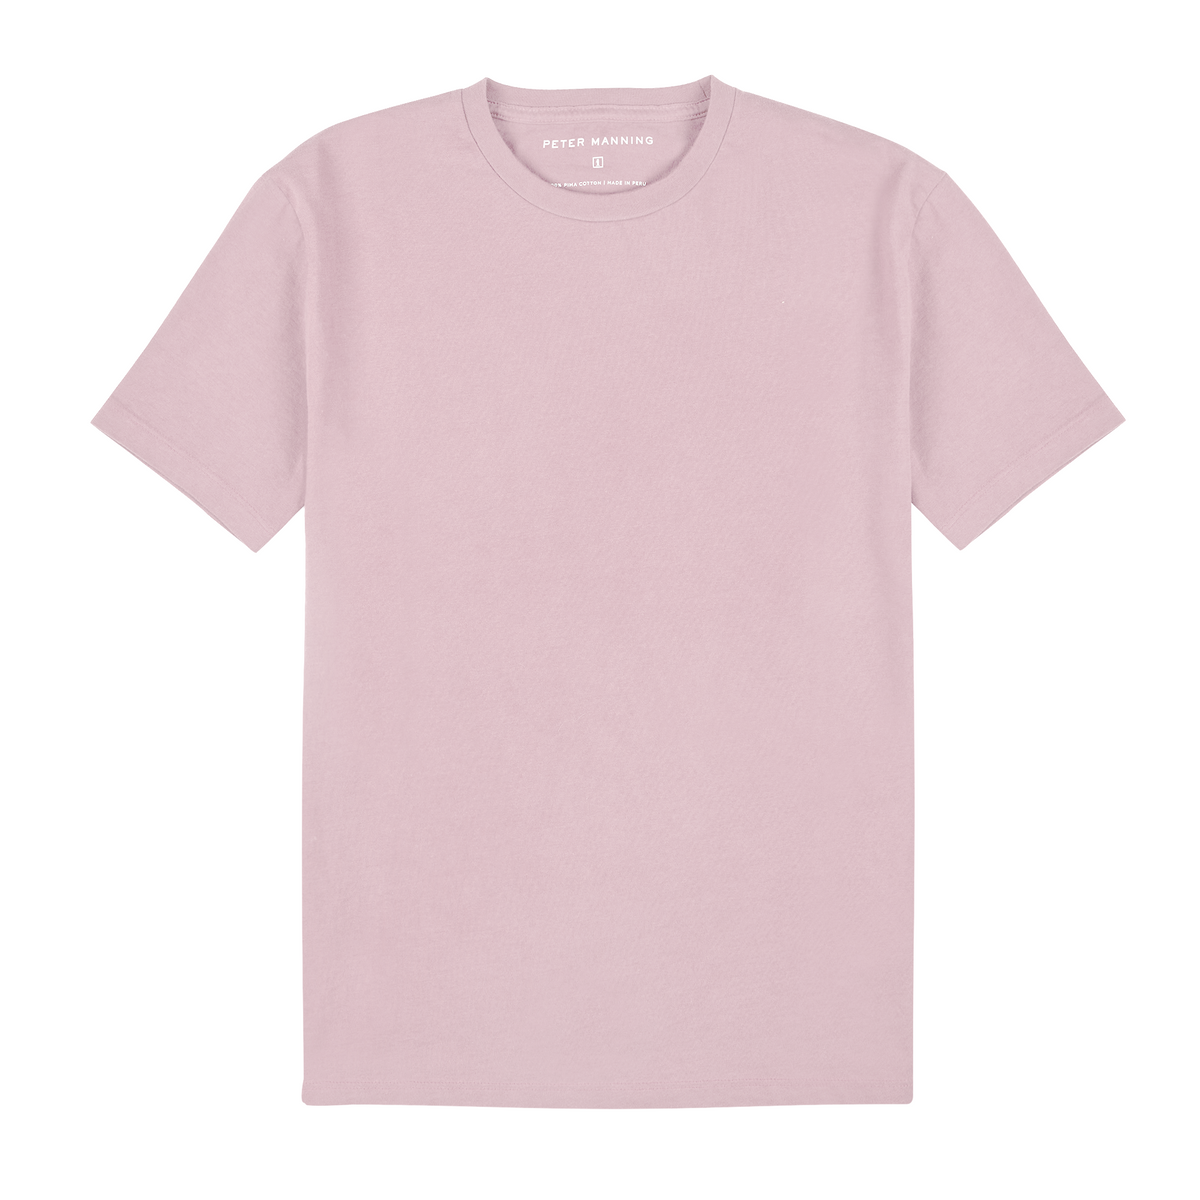 Vintage Crew T-Shirt, Pale Pink | Peter Manning NYC